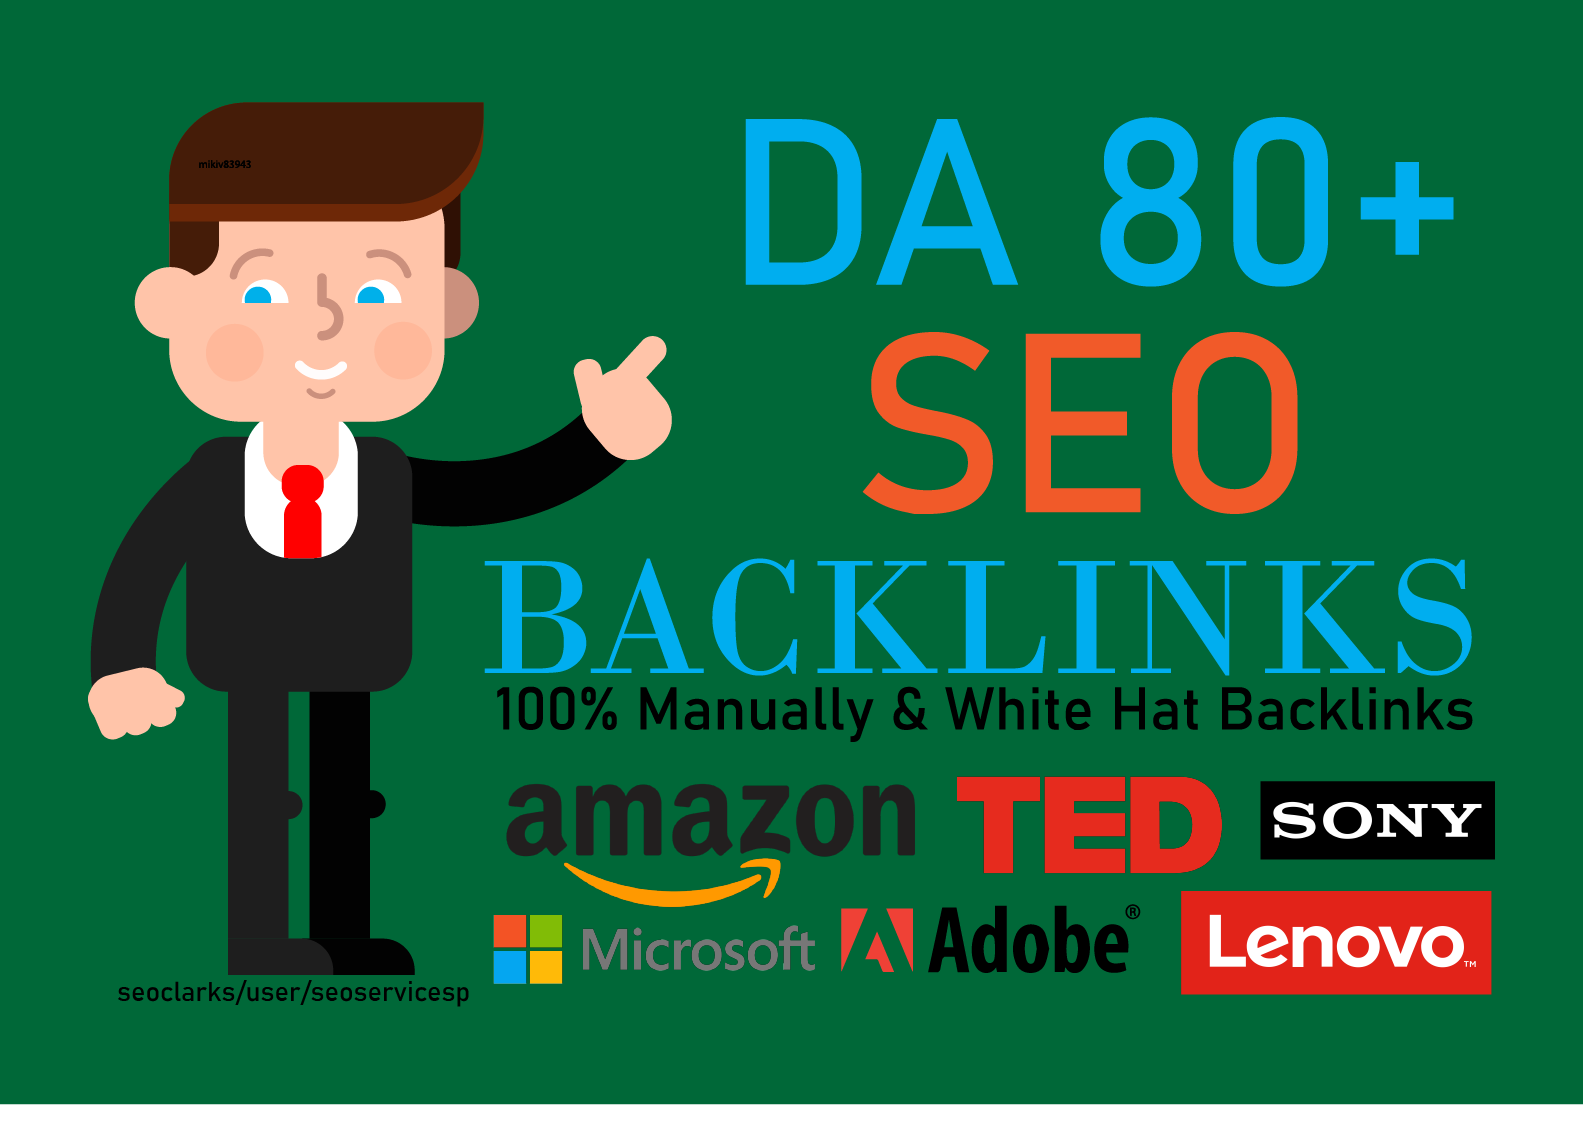 50 Big Brand Companies Seo Backlinks With DA 80 Site For Google Top Ranking